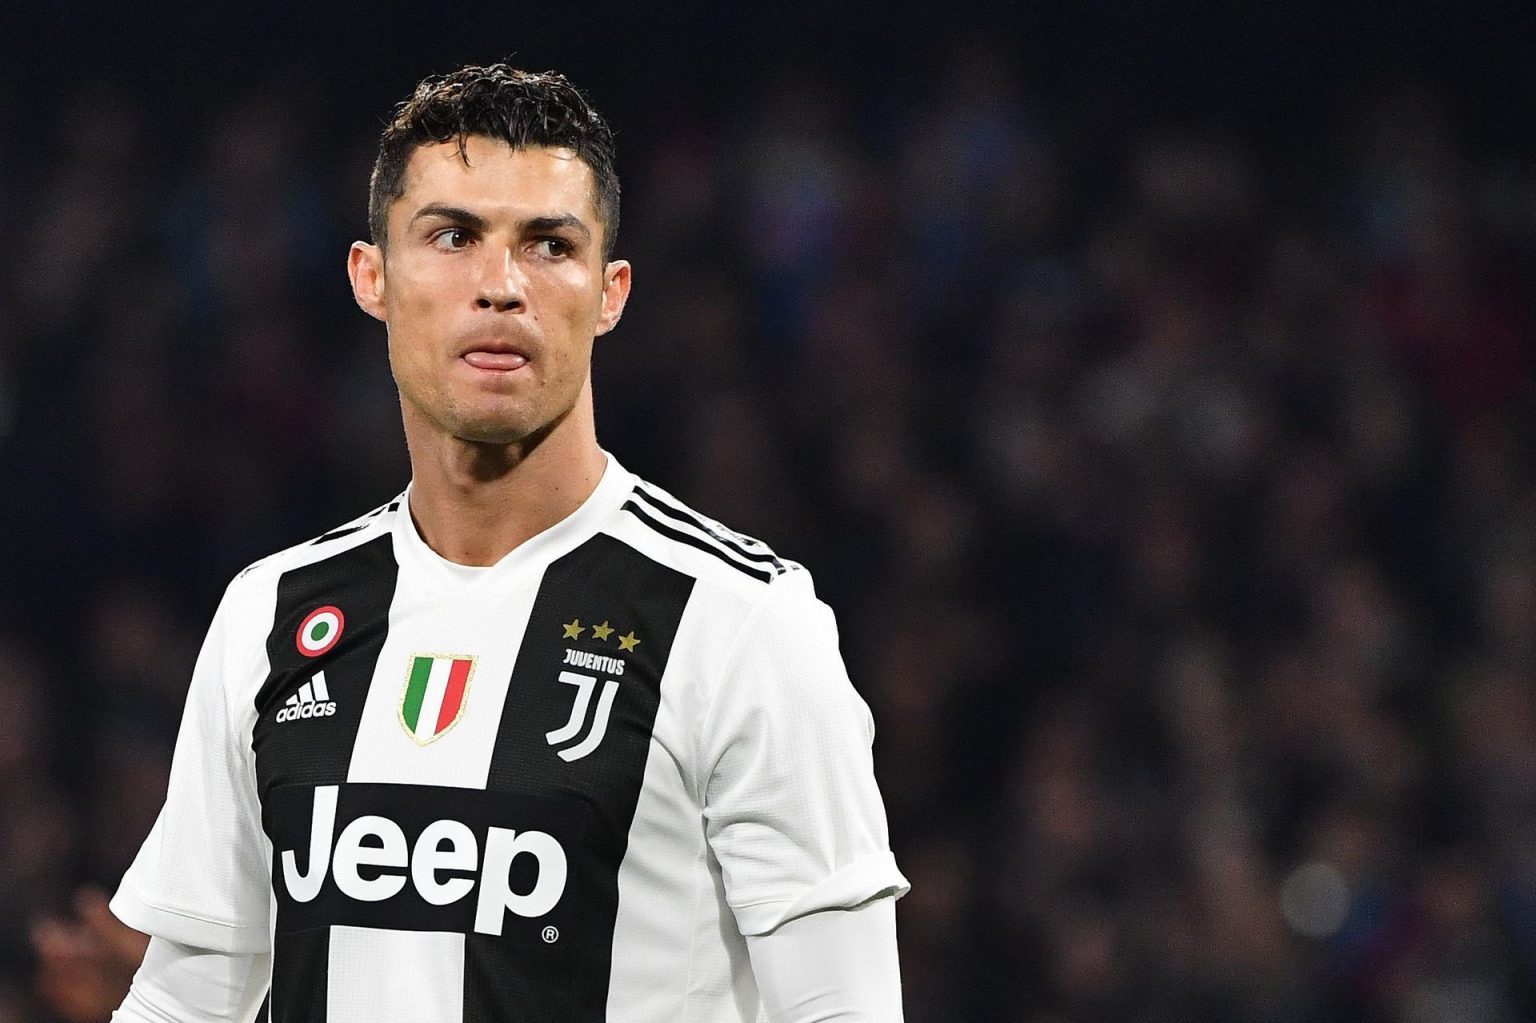 Ronaldo Claims Credit for Reviving Italian Serie A, Faces Backlash on Social Media